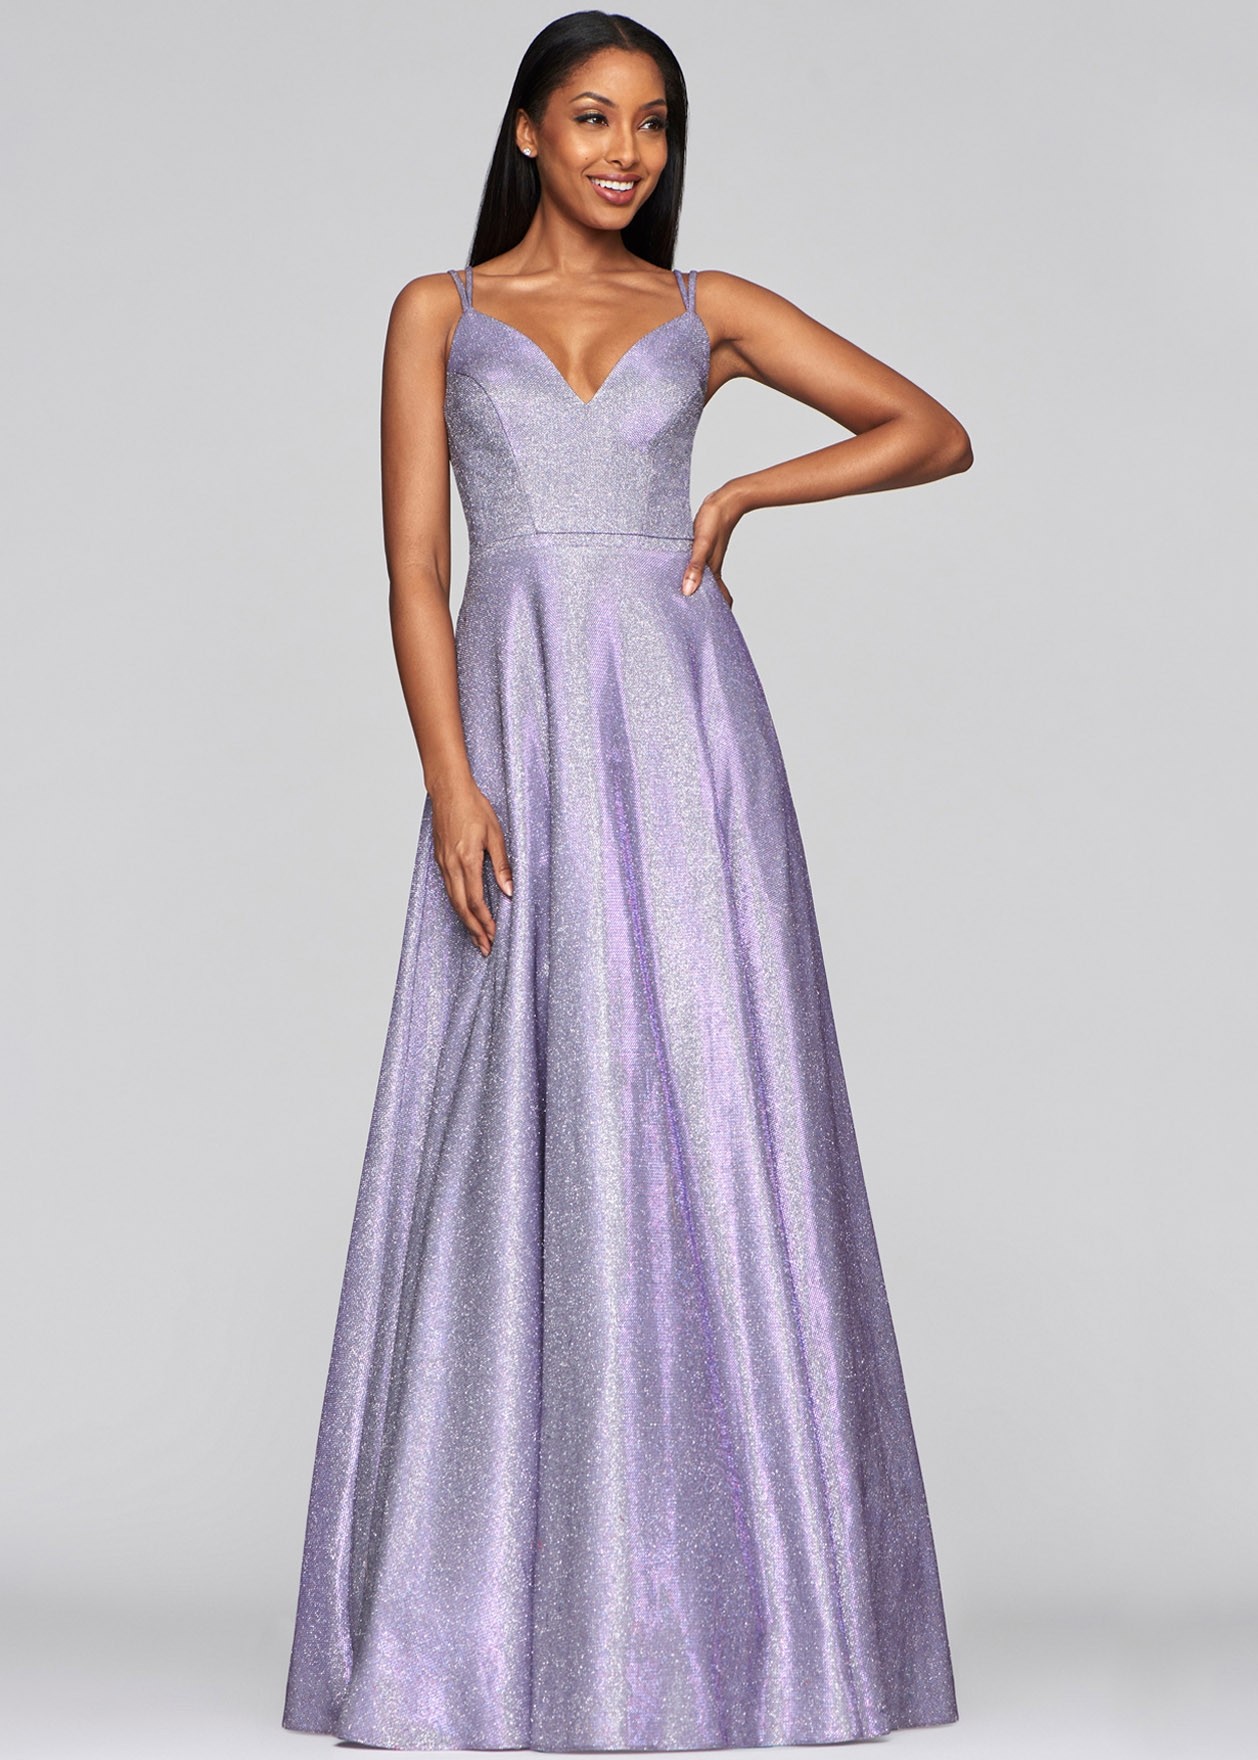 Faviana S10424 Prom Dress